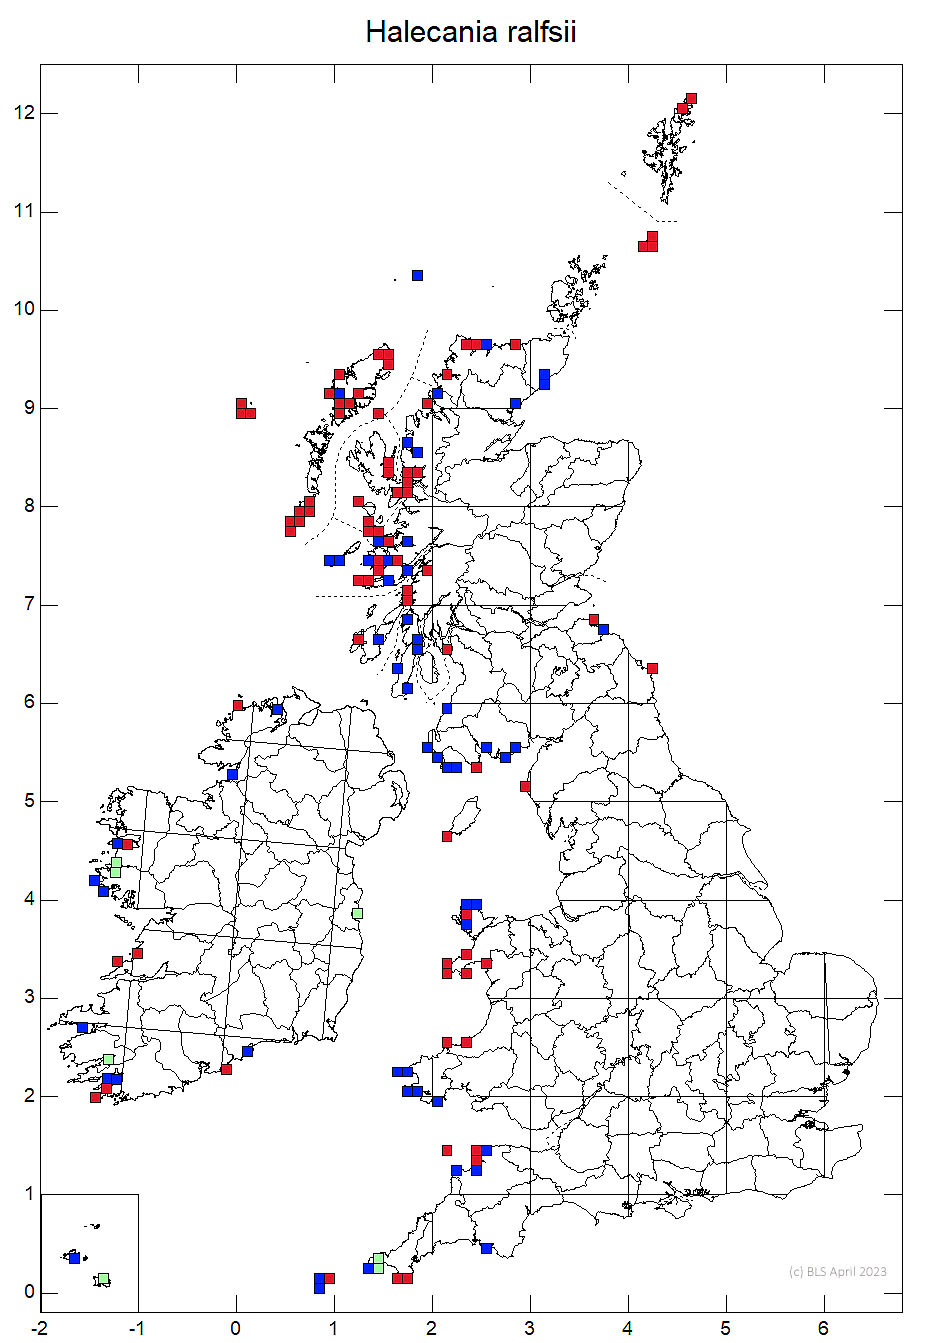 Halecania ralfsii 10km sq distribution map